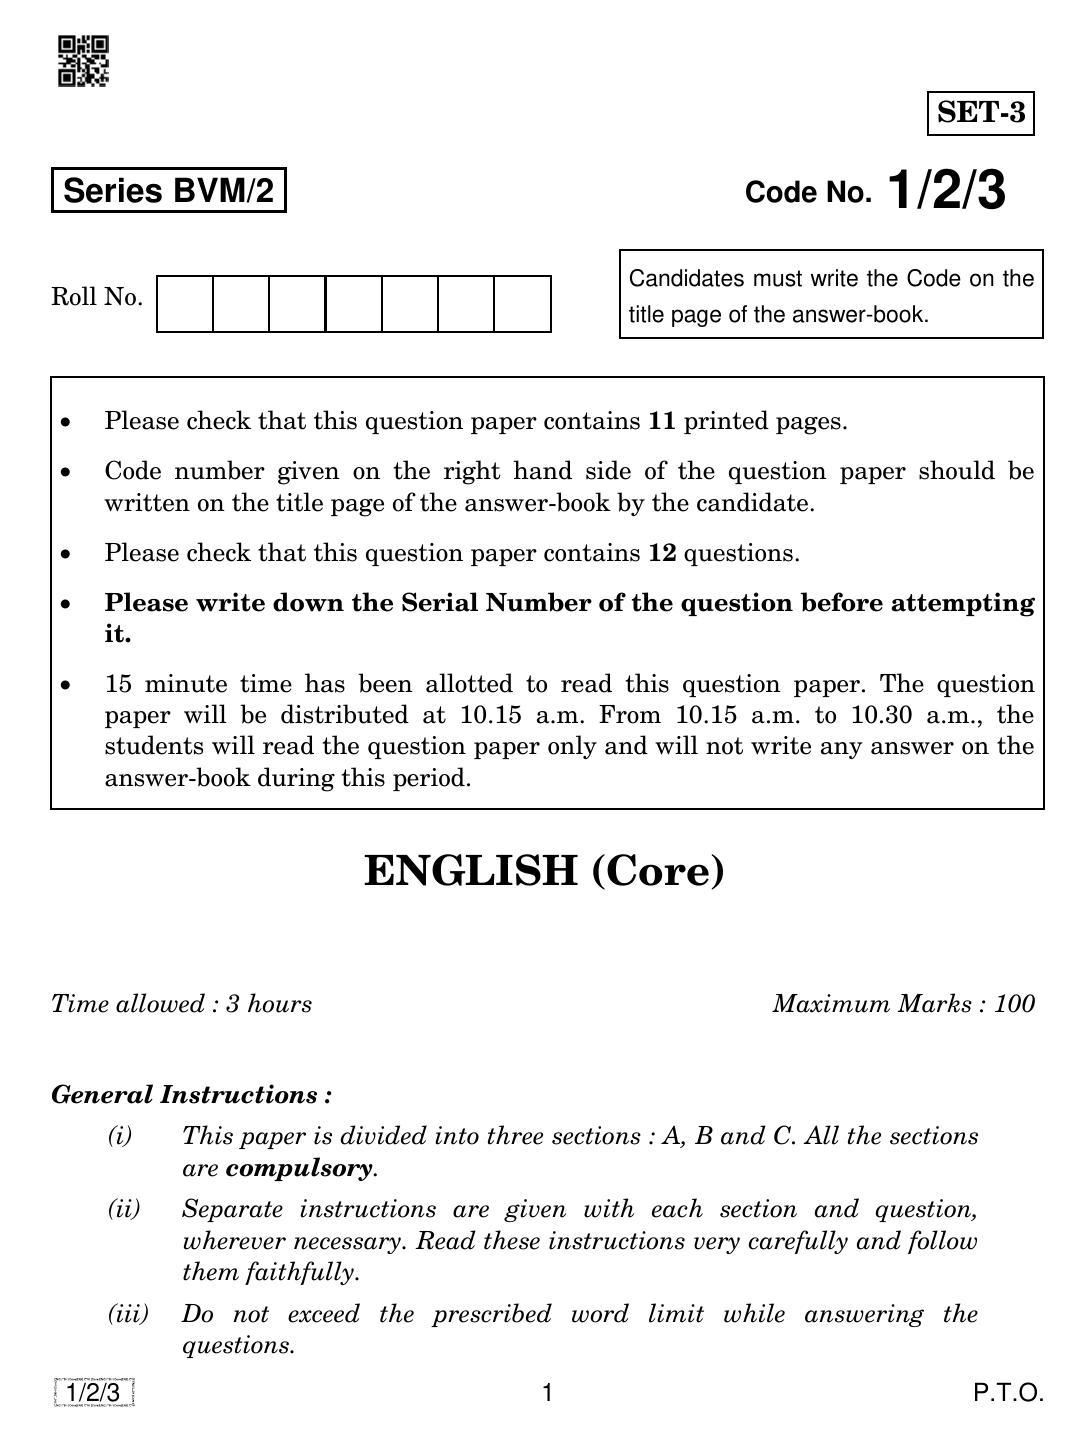 CBSE Class 12 1-2-3 English Core 2019 Question Paper - Page 1